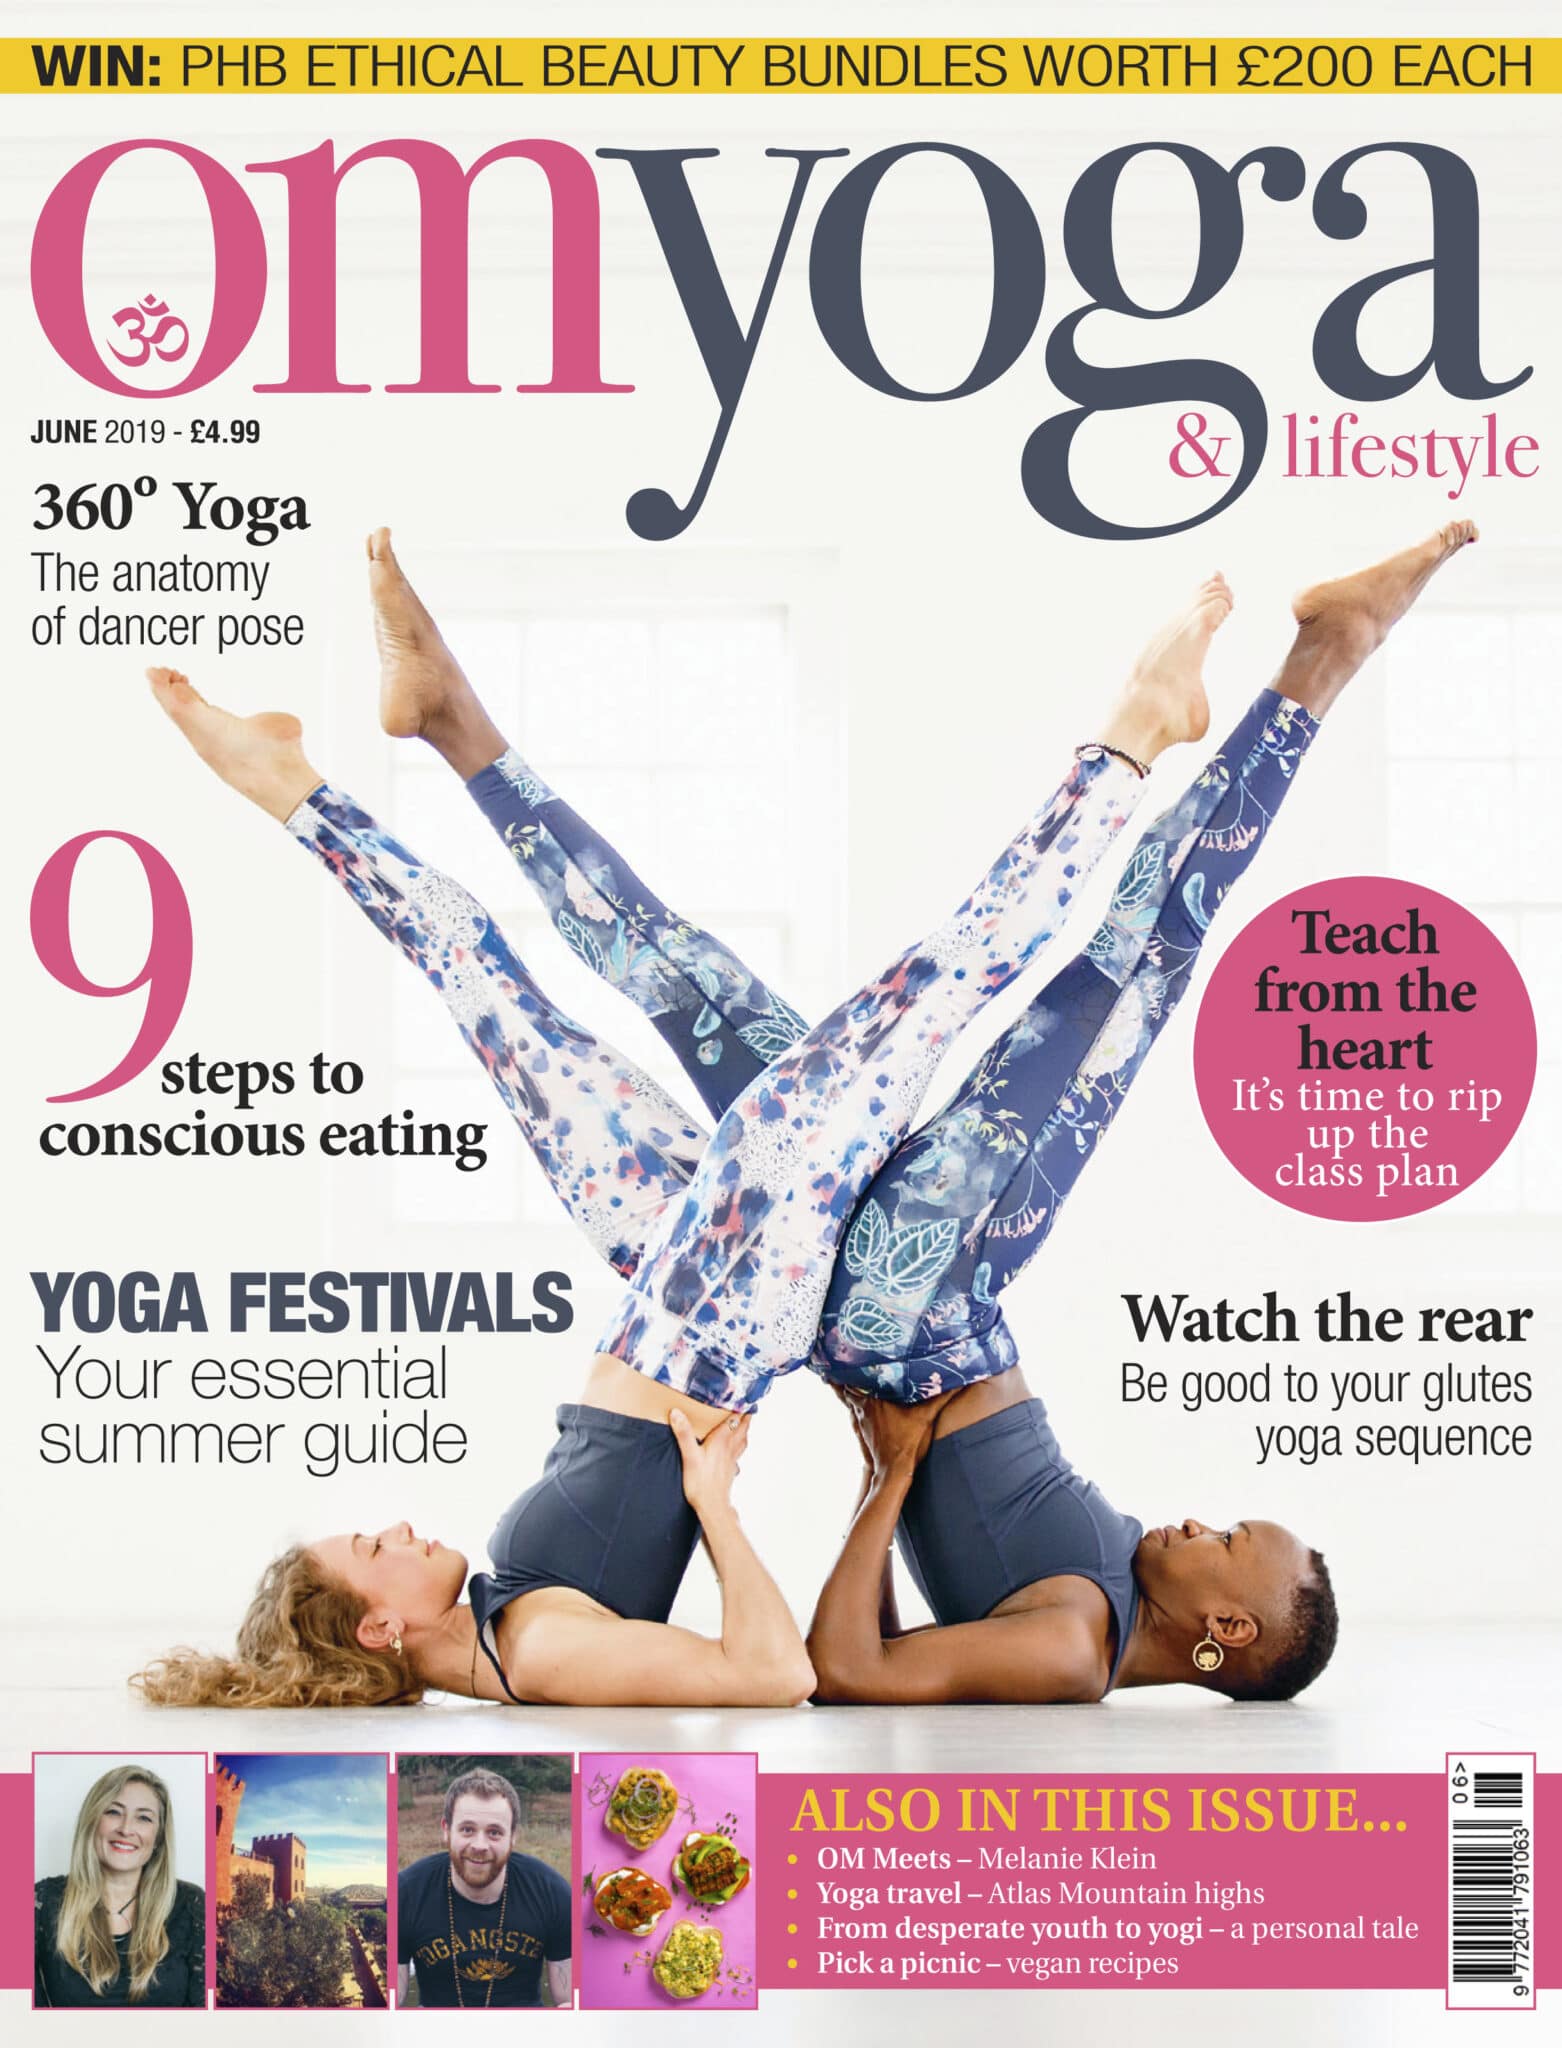 Vinyasa Flow Yoga to Dancers Pose (Heart Opening) – Melissa Wick - YouTube